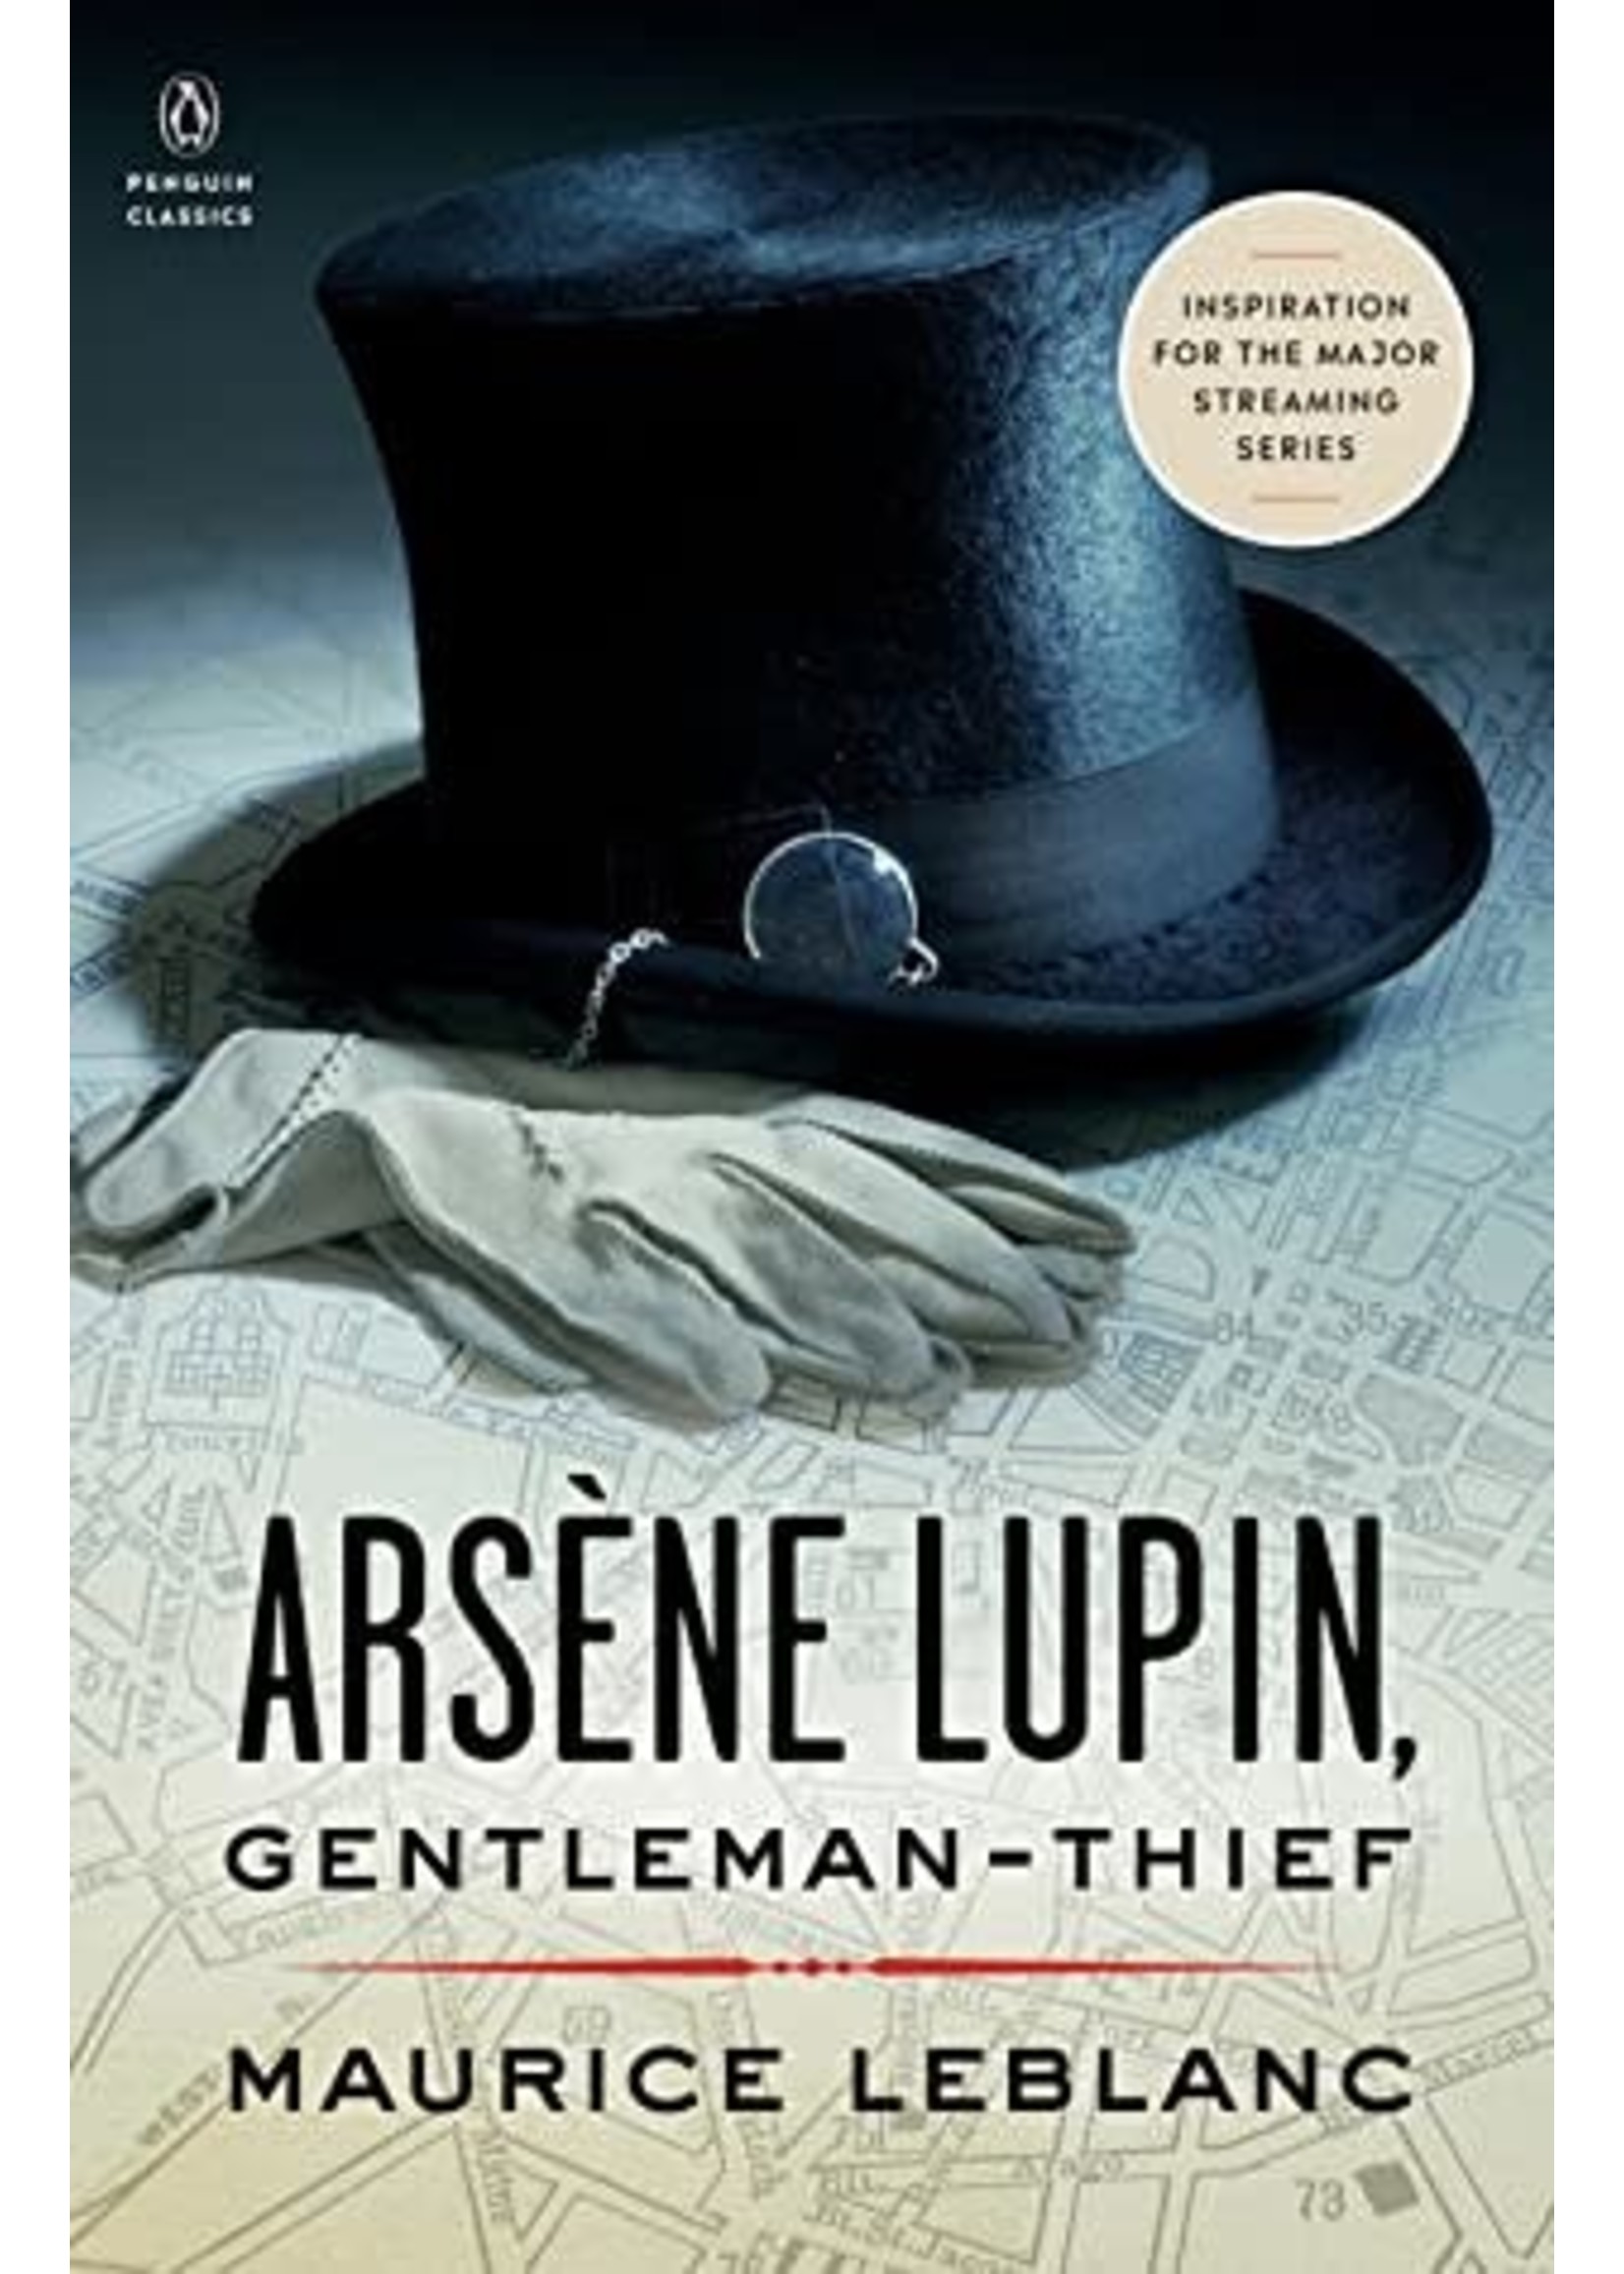 Arsène Lupin, Gentleman-Thief (Arsène Lupin #1) by Maurice Leblanc